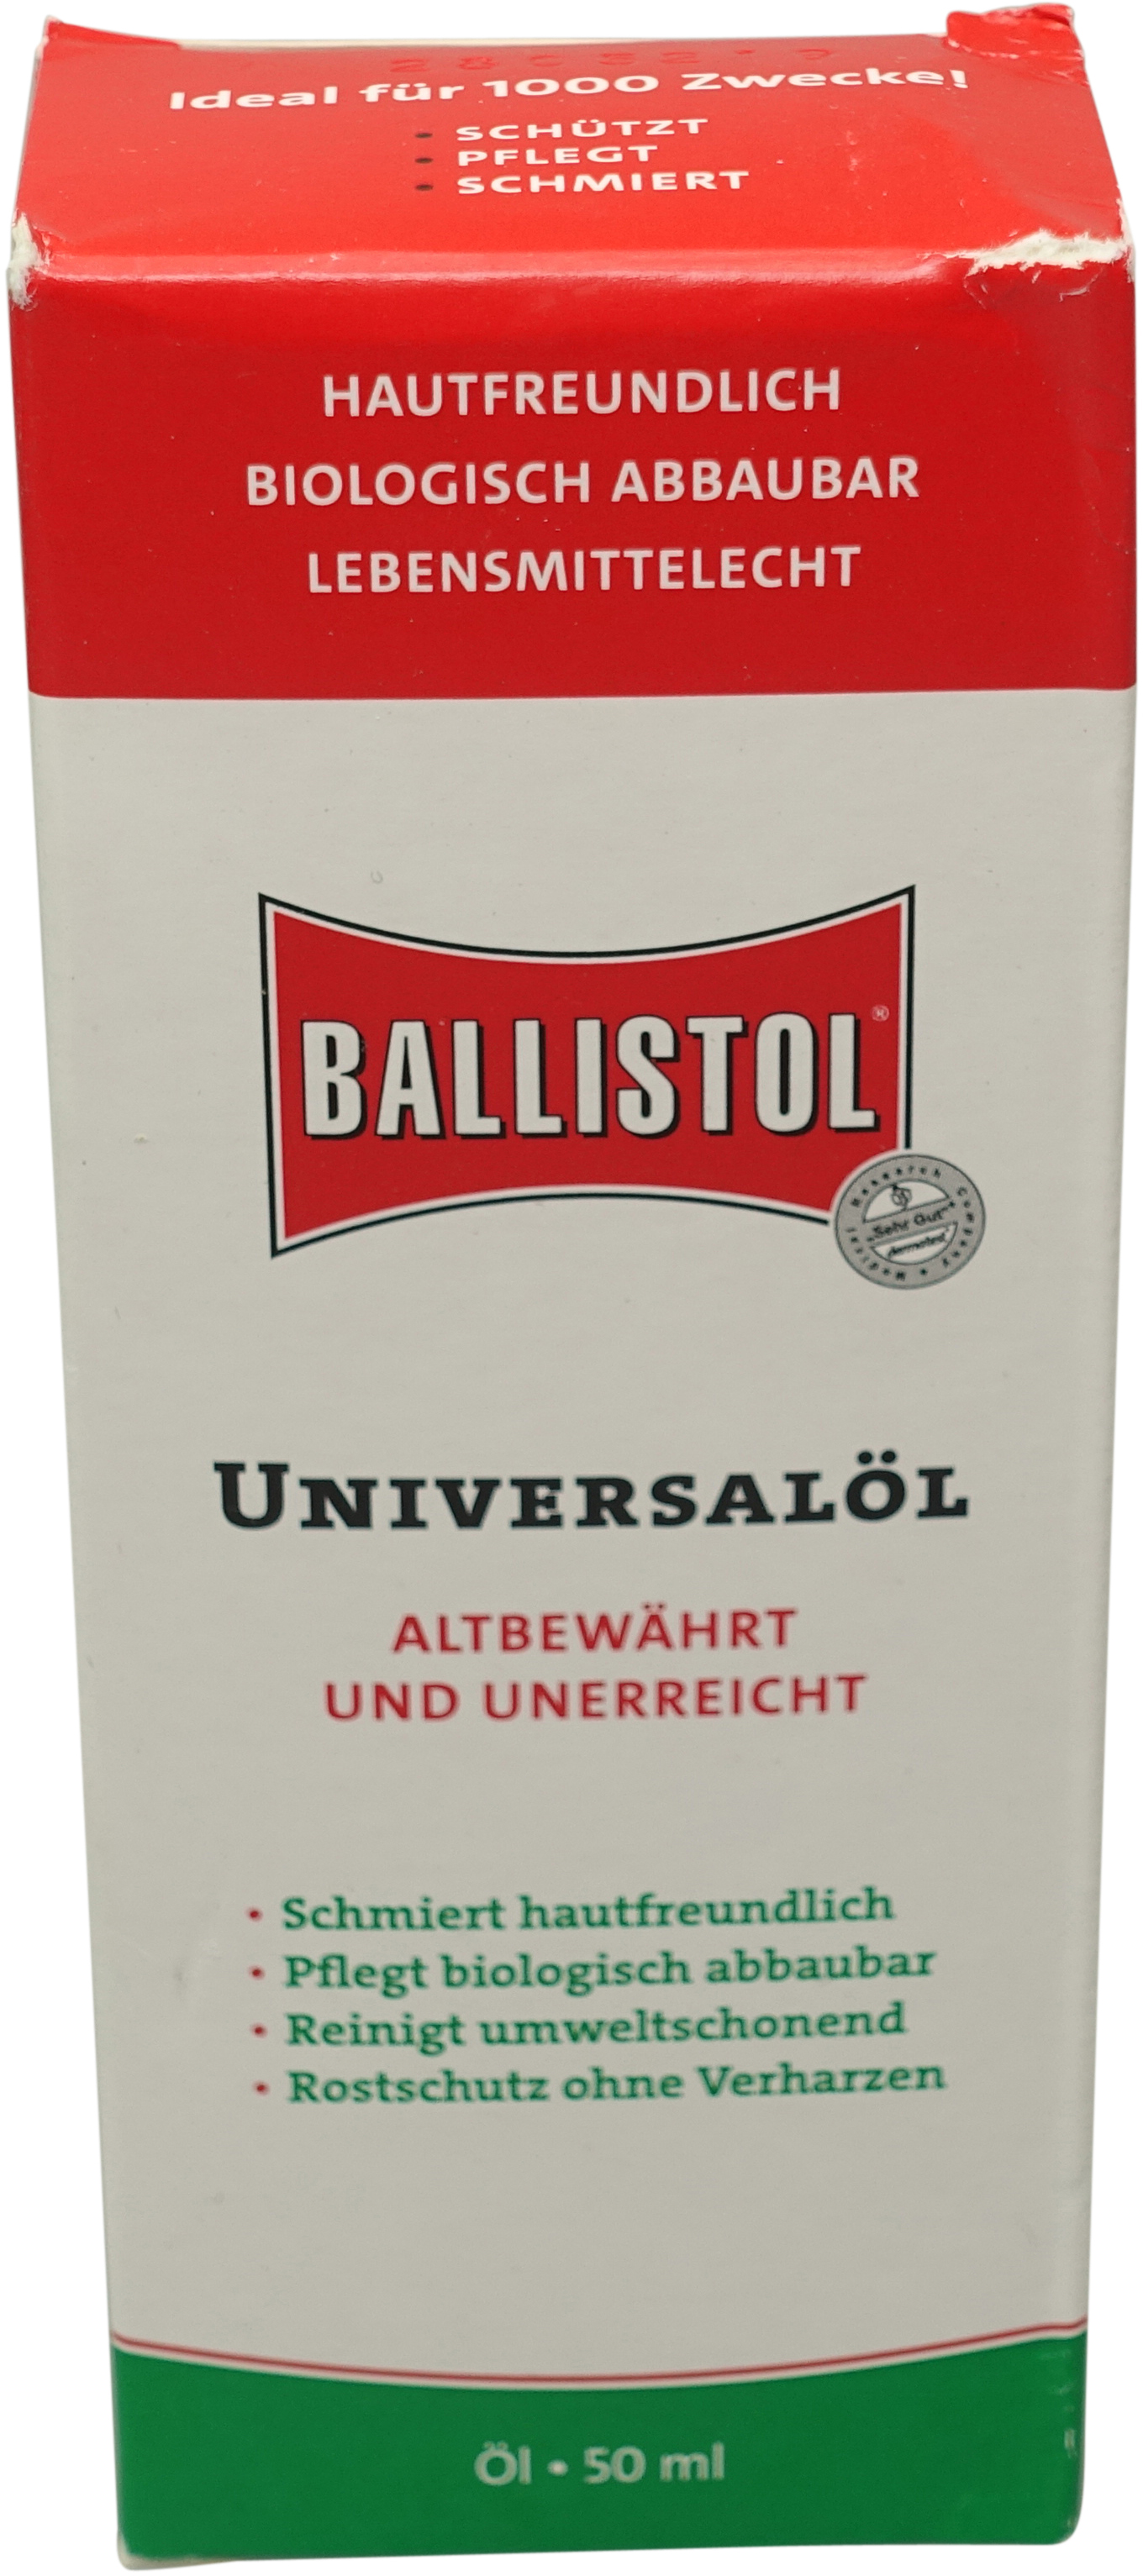 Ballistol Universal Oil Bottle 50ml :: Chemicals :: Tools